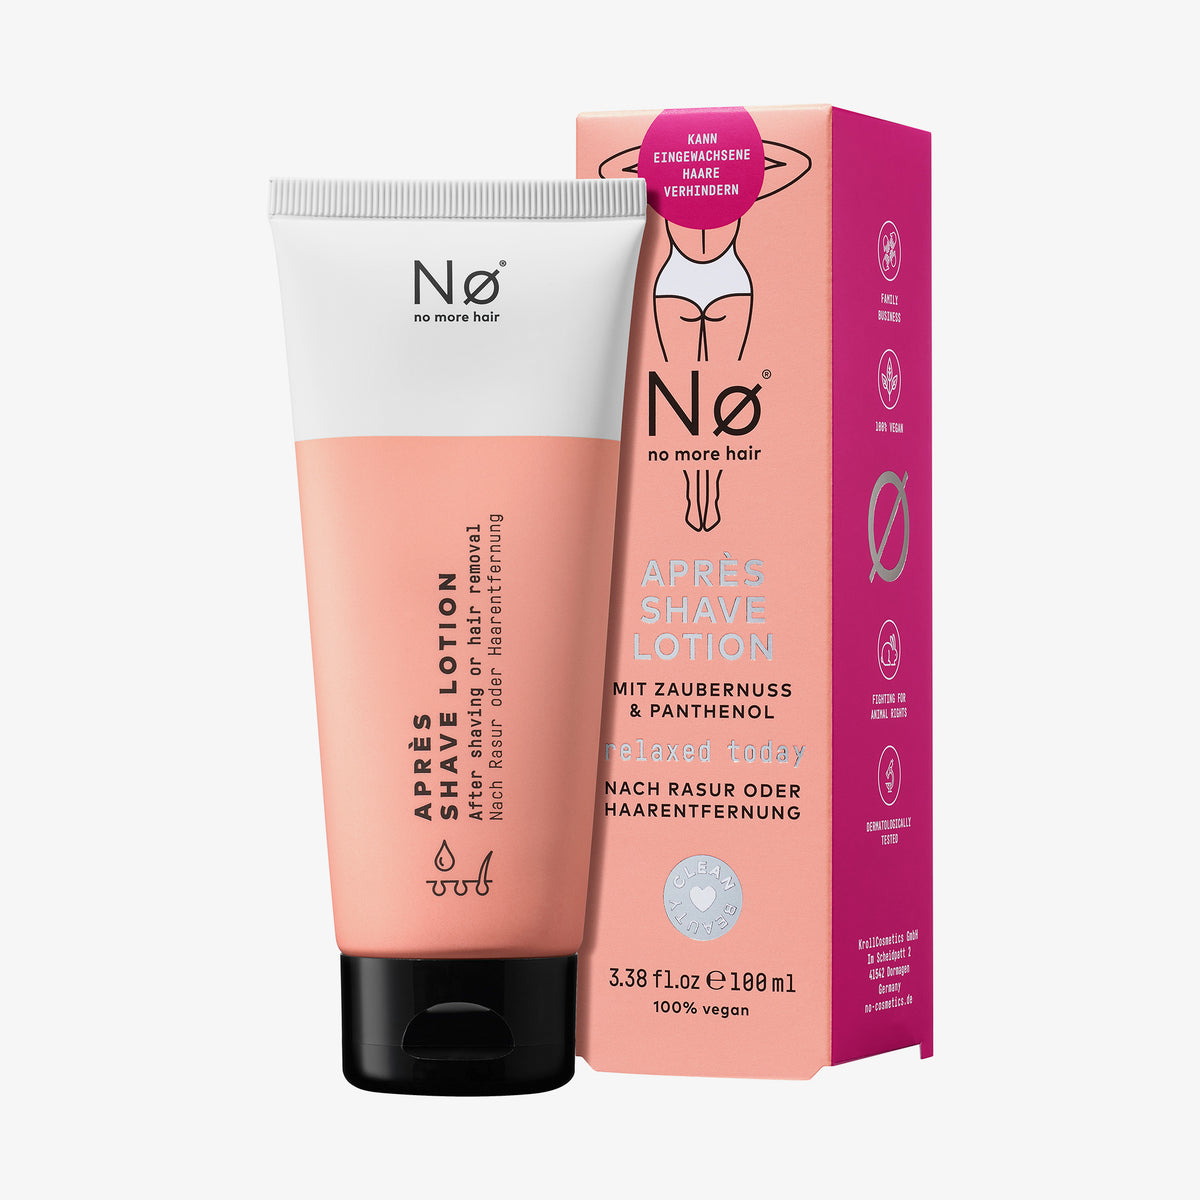 Nø Cosmetics | relaxed tøday Aprés Shave Lotion